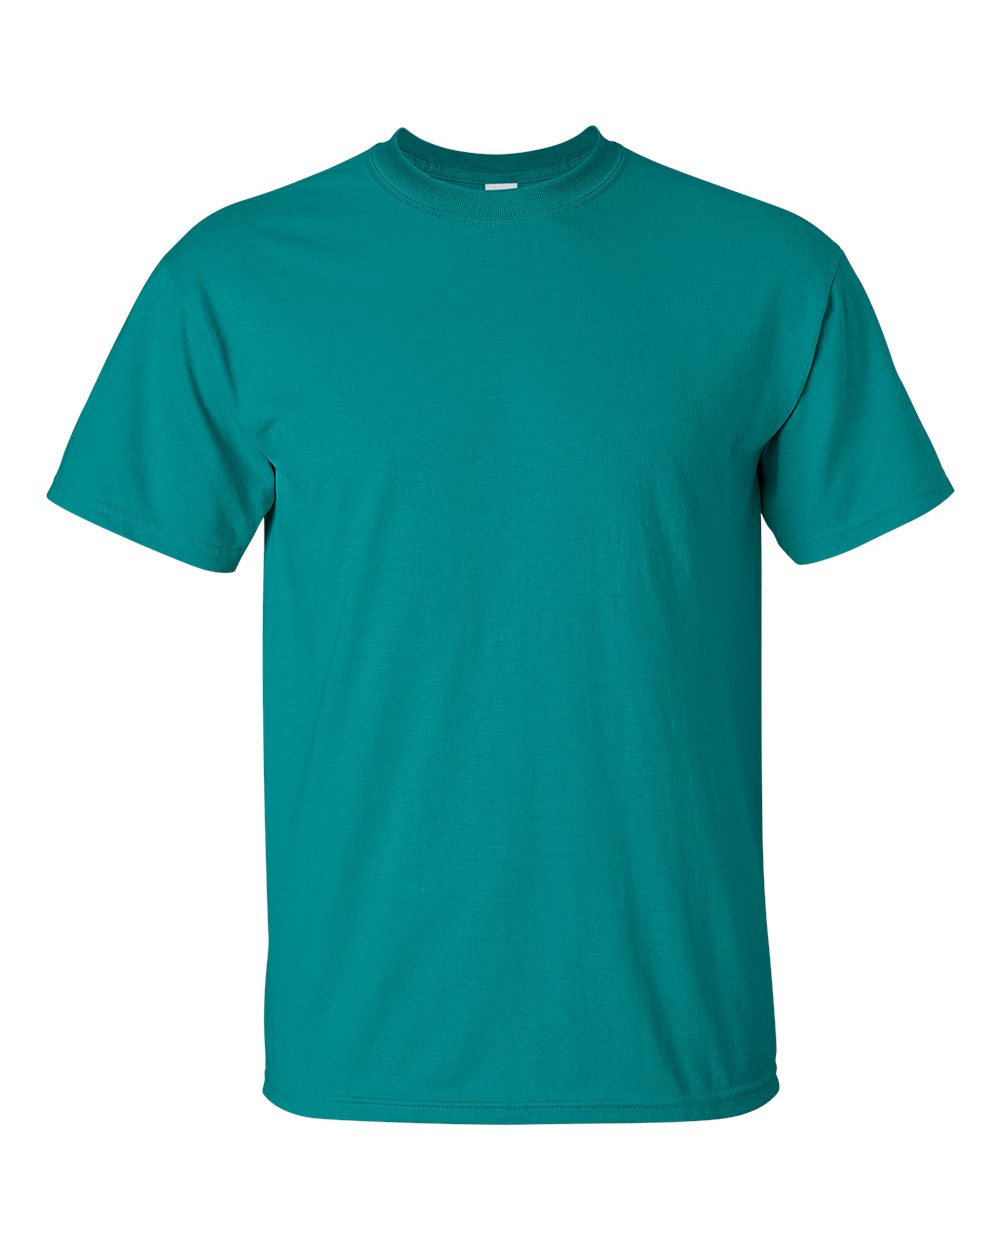 Gildan 2000 Ultra Cotton T-Shirt :: Jade Dome, Size XL